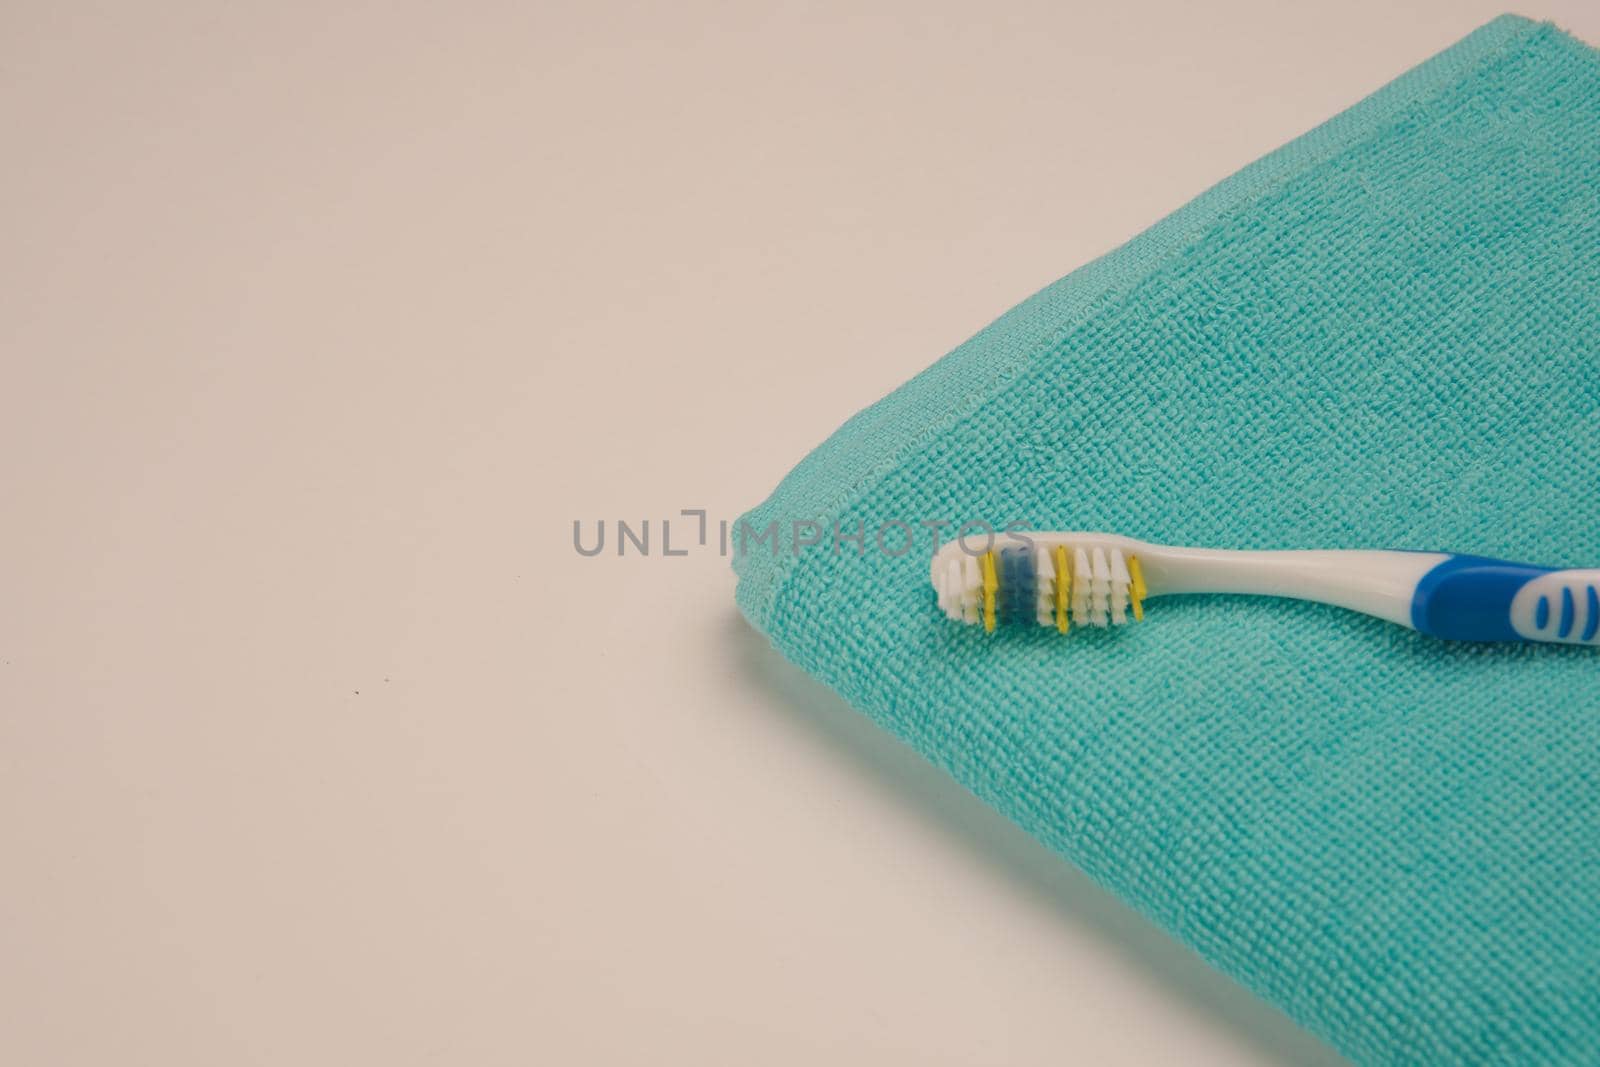 toothbrush towels hygiene care bath supplies sanitation by Vichizh